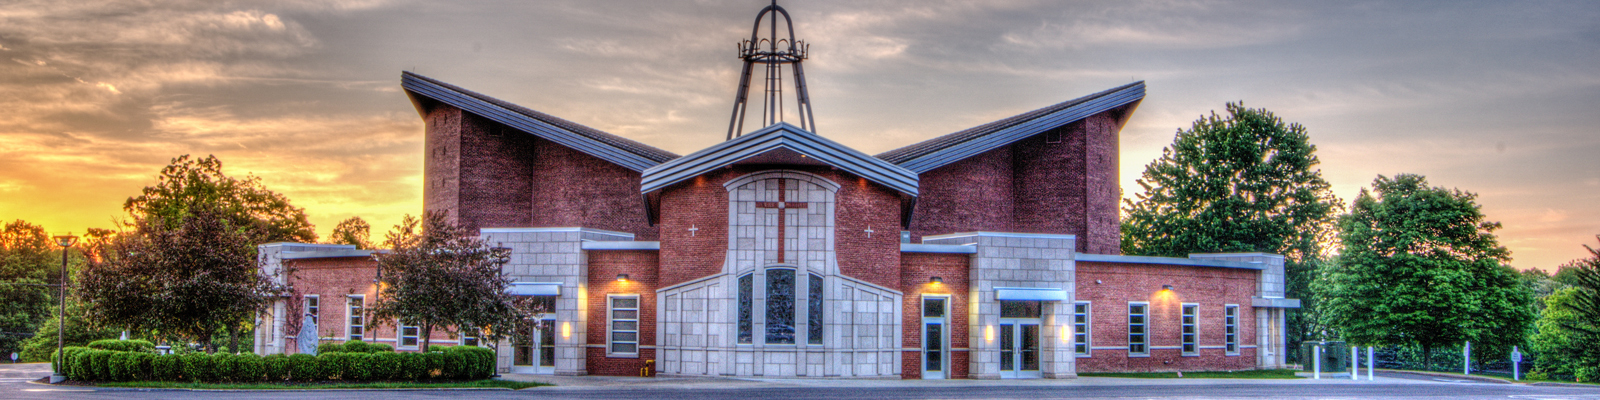 St. Basil Catholic Church Brecksville Podcast